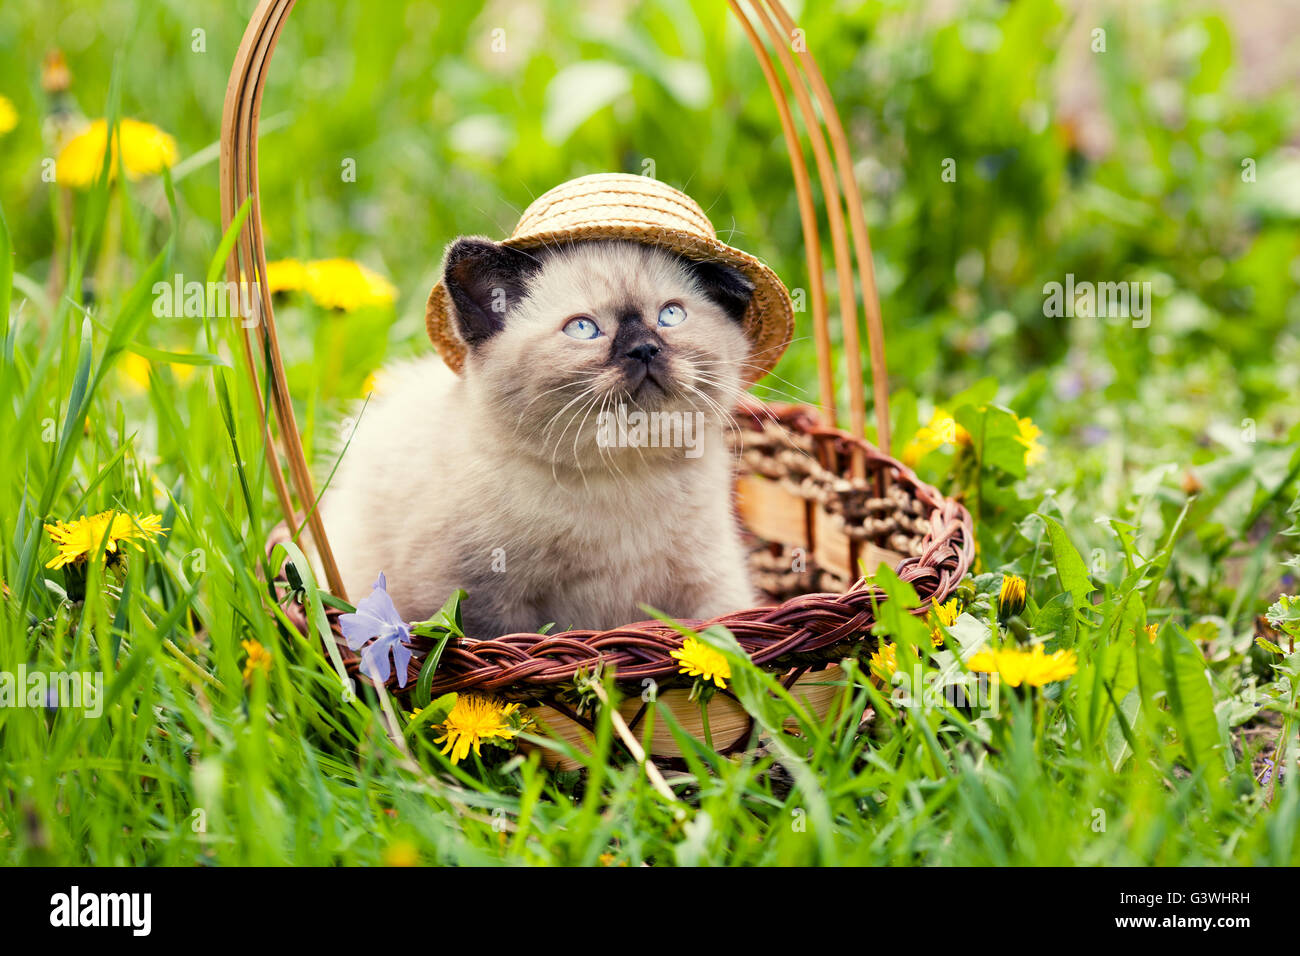 https://c8.alamy.com/comp/G3WHRH/little-kitten-wearing-straw-hat-sitting-in-a-basket-on-the-grass-G3WHRH.jpg